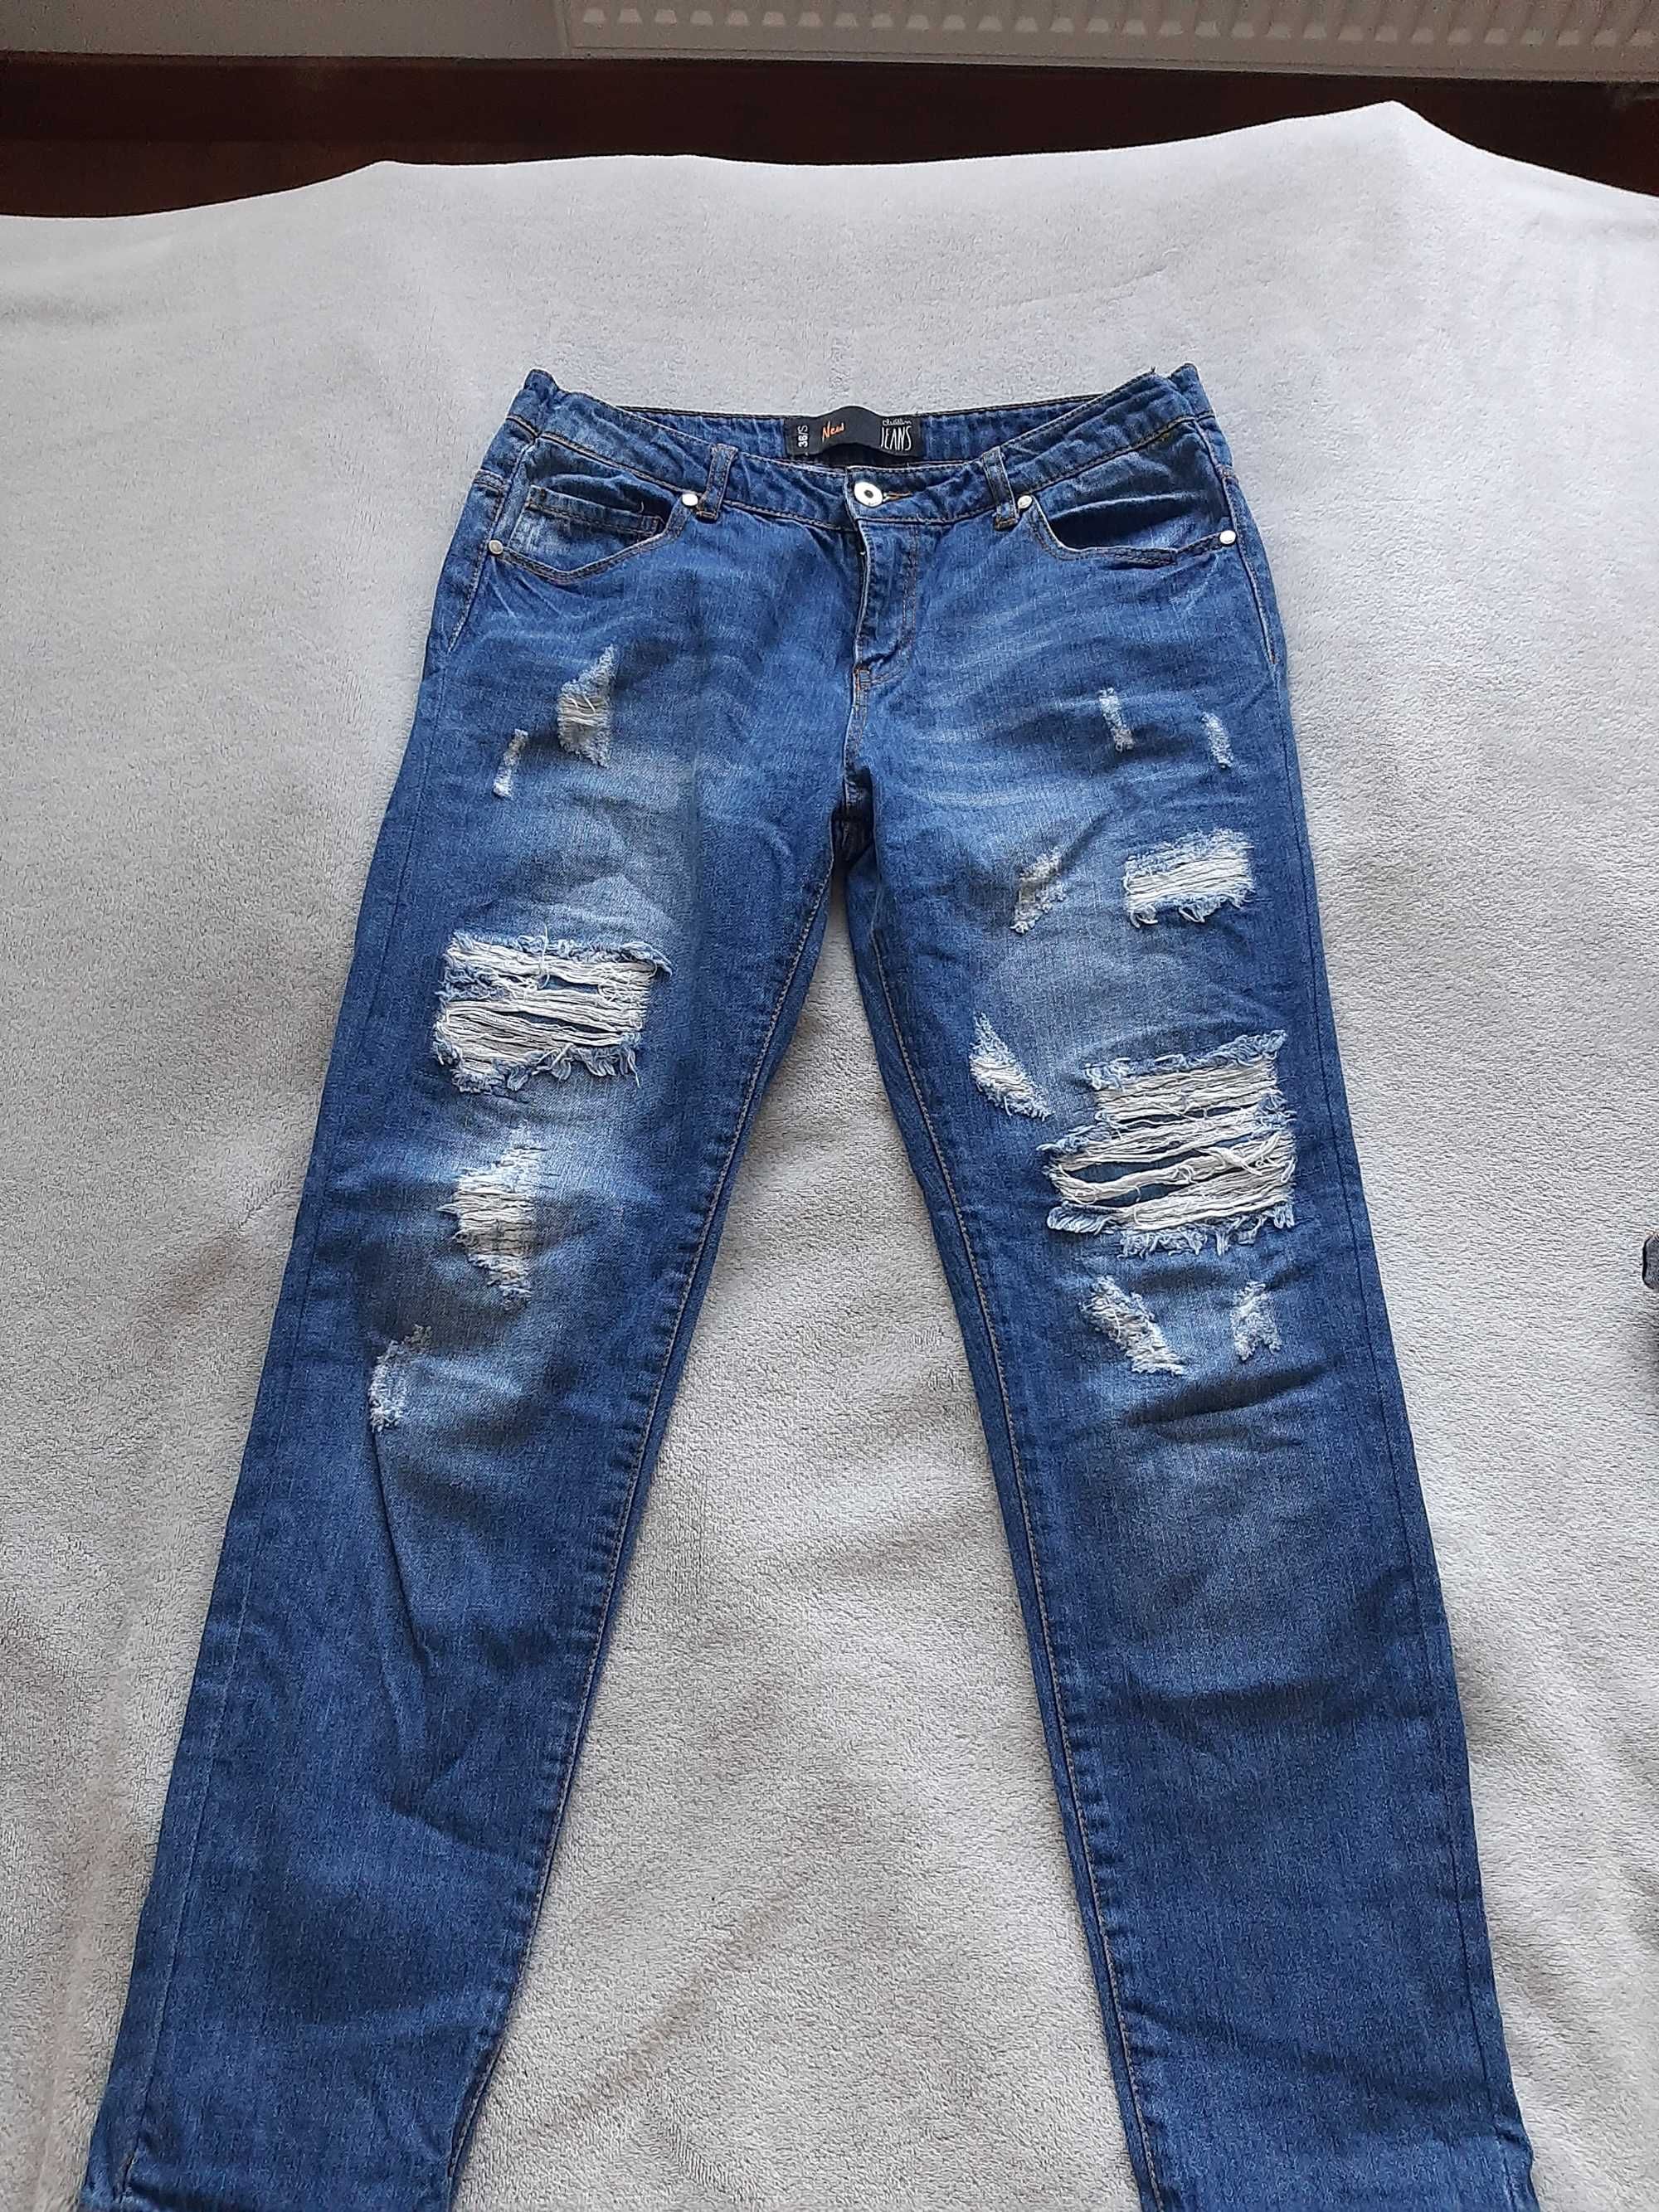 Spodnie damskie jeansy rozm 36 chillin